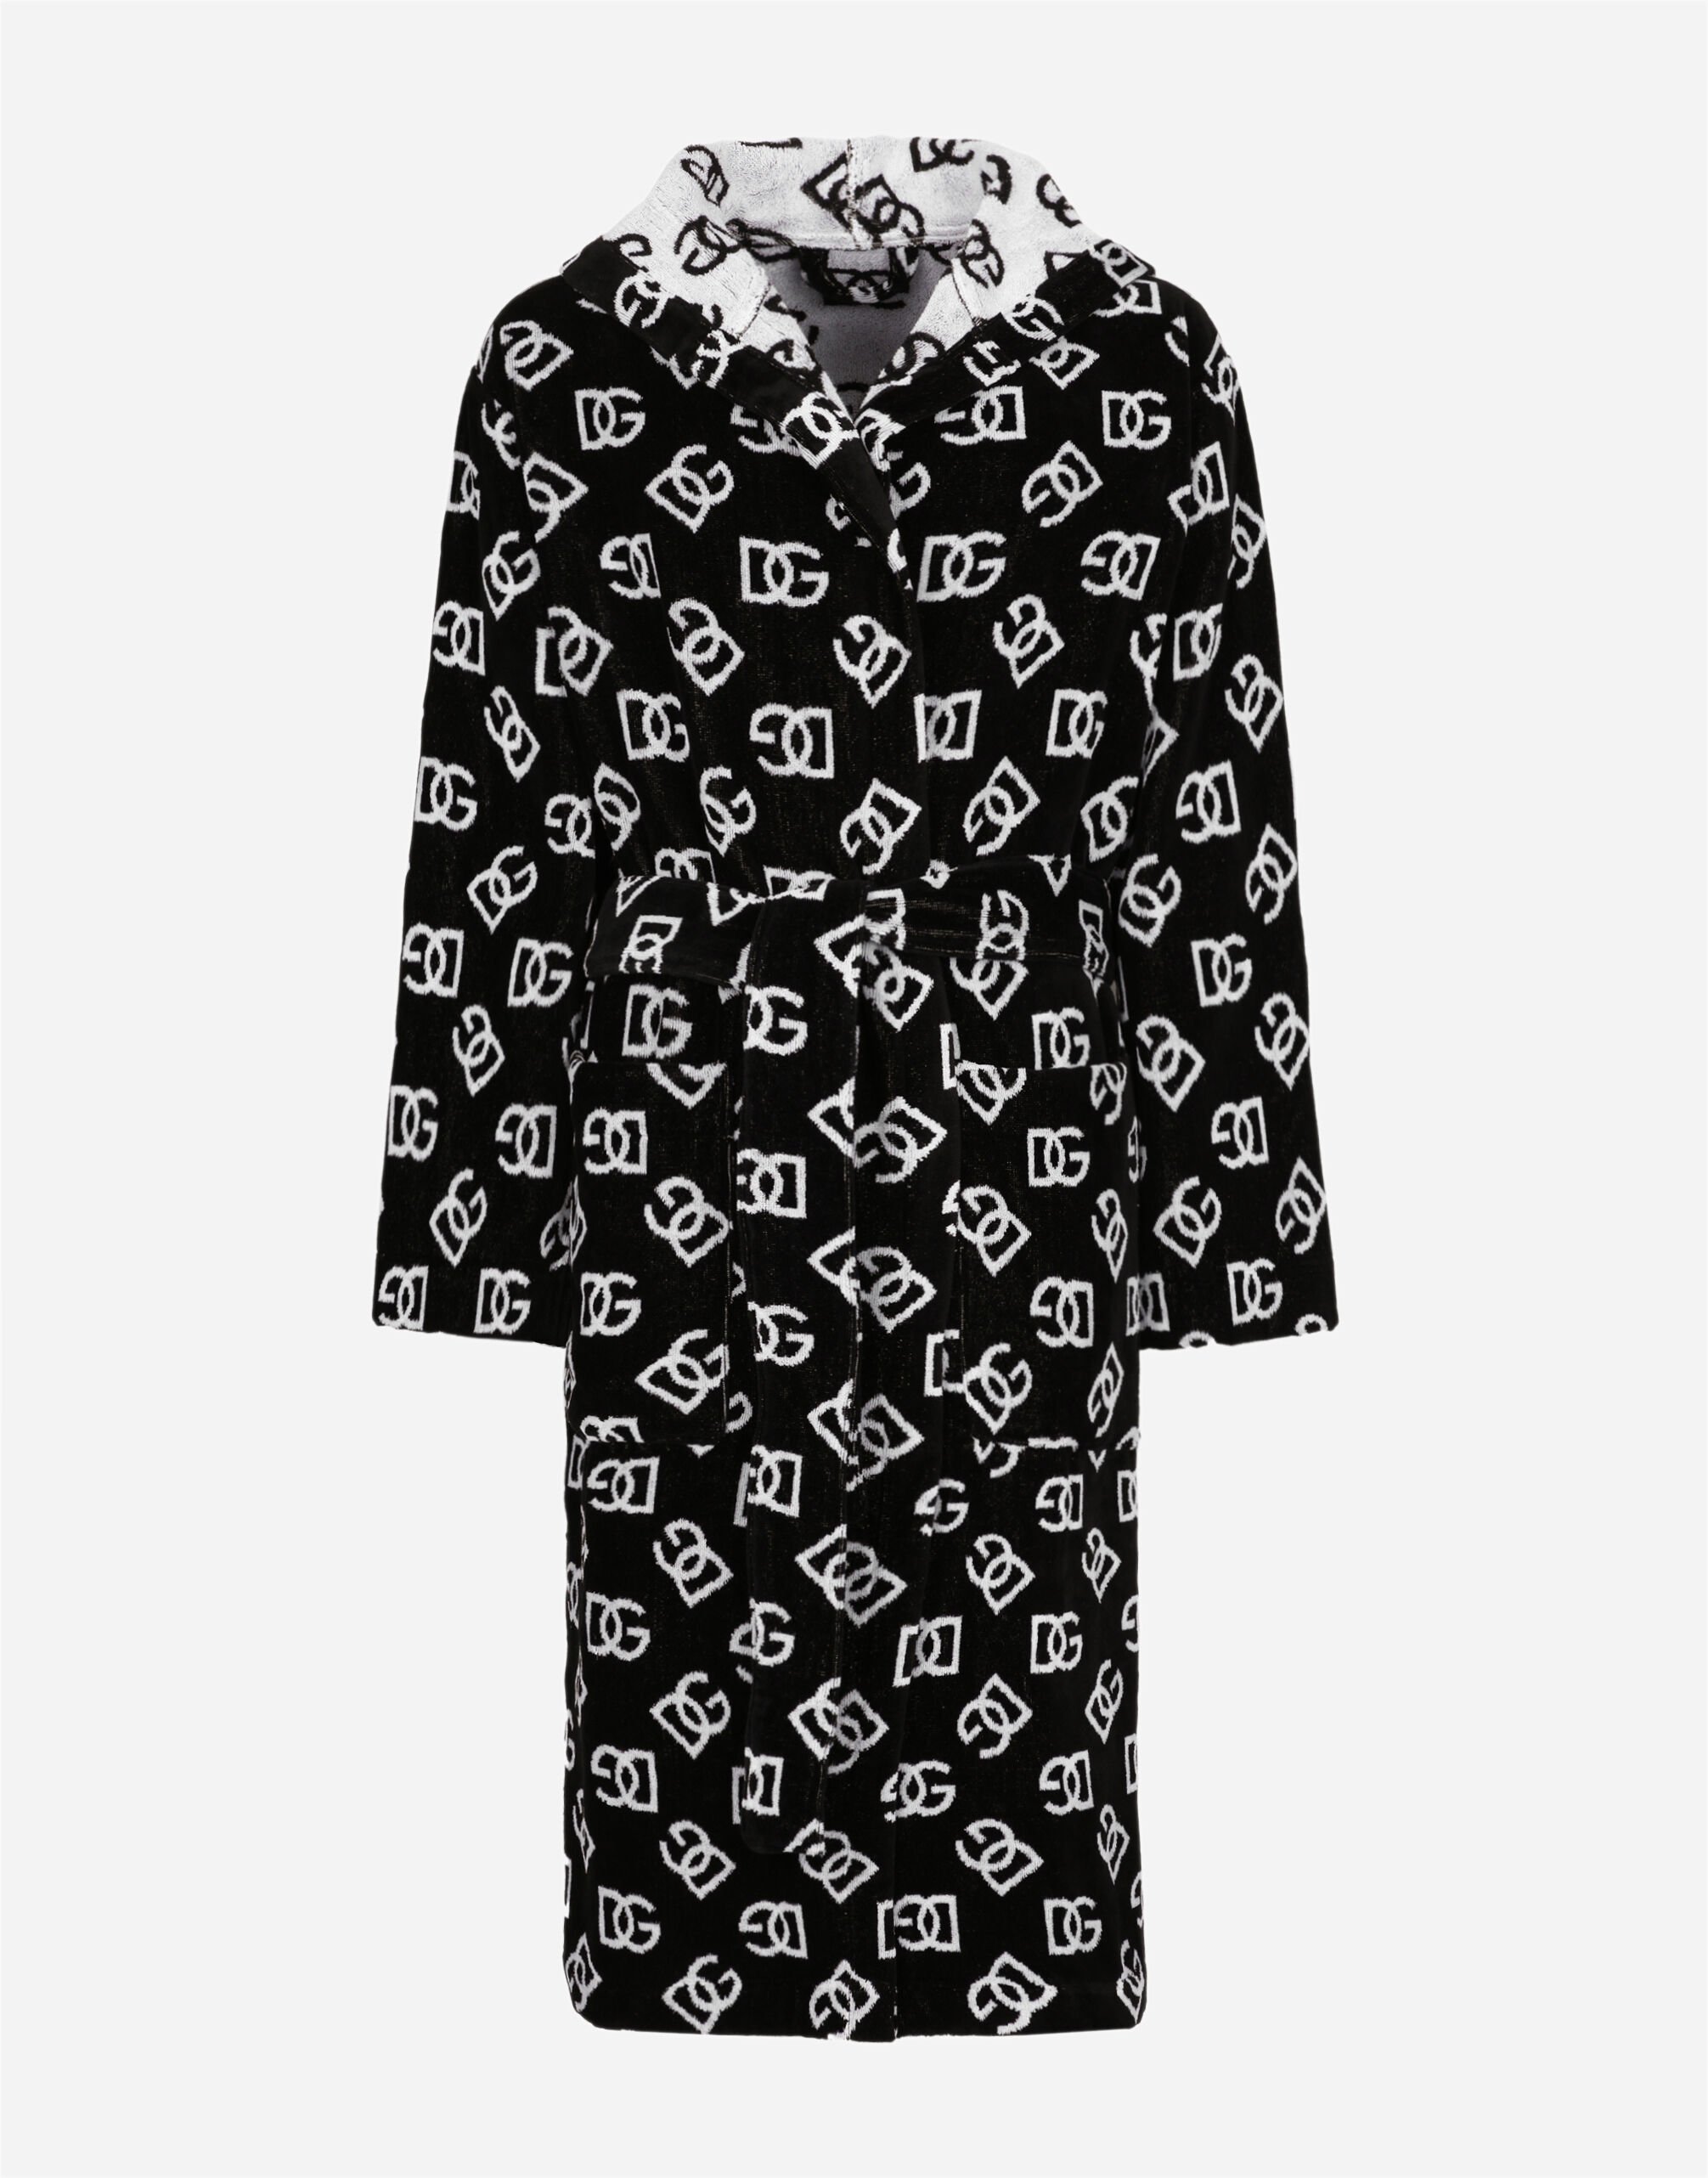 Dolce & Gabbana Bath Robe in Cotton Terry Jacquard Multicolor TCF015TCAHC